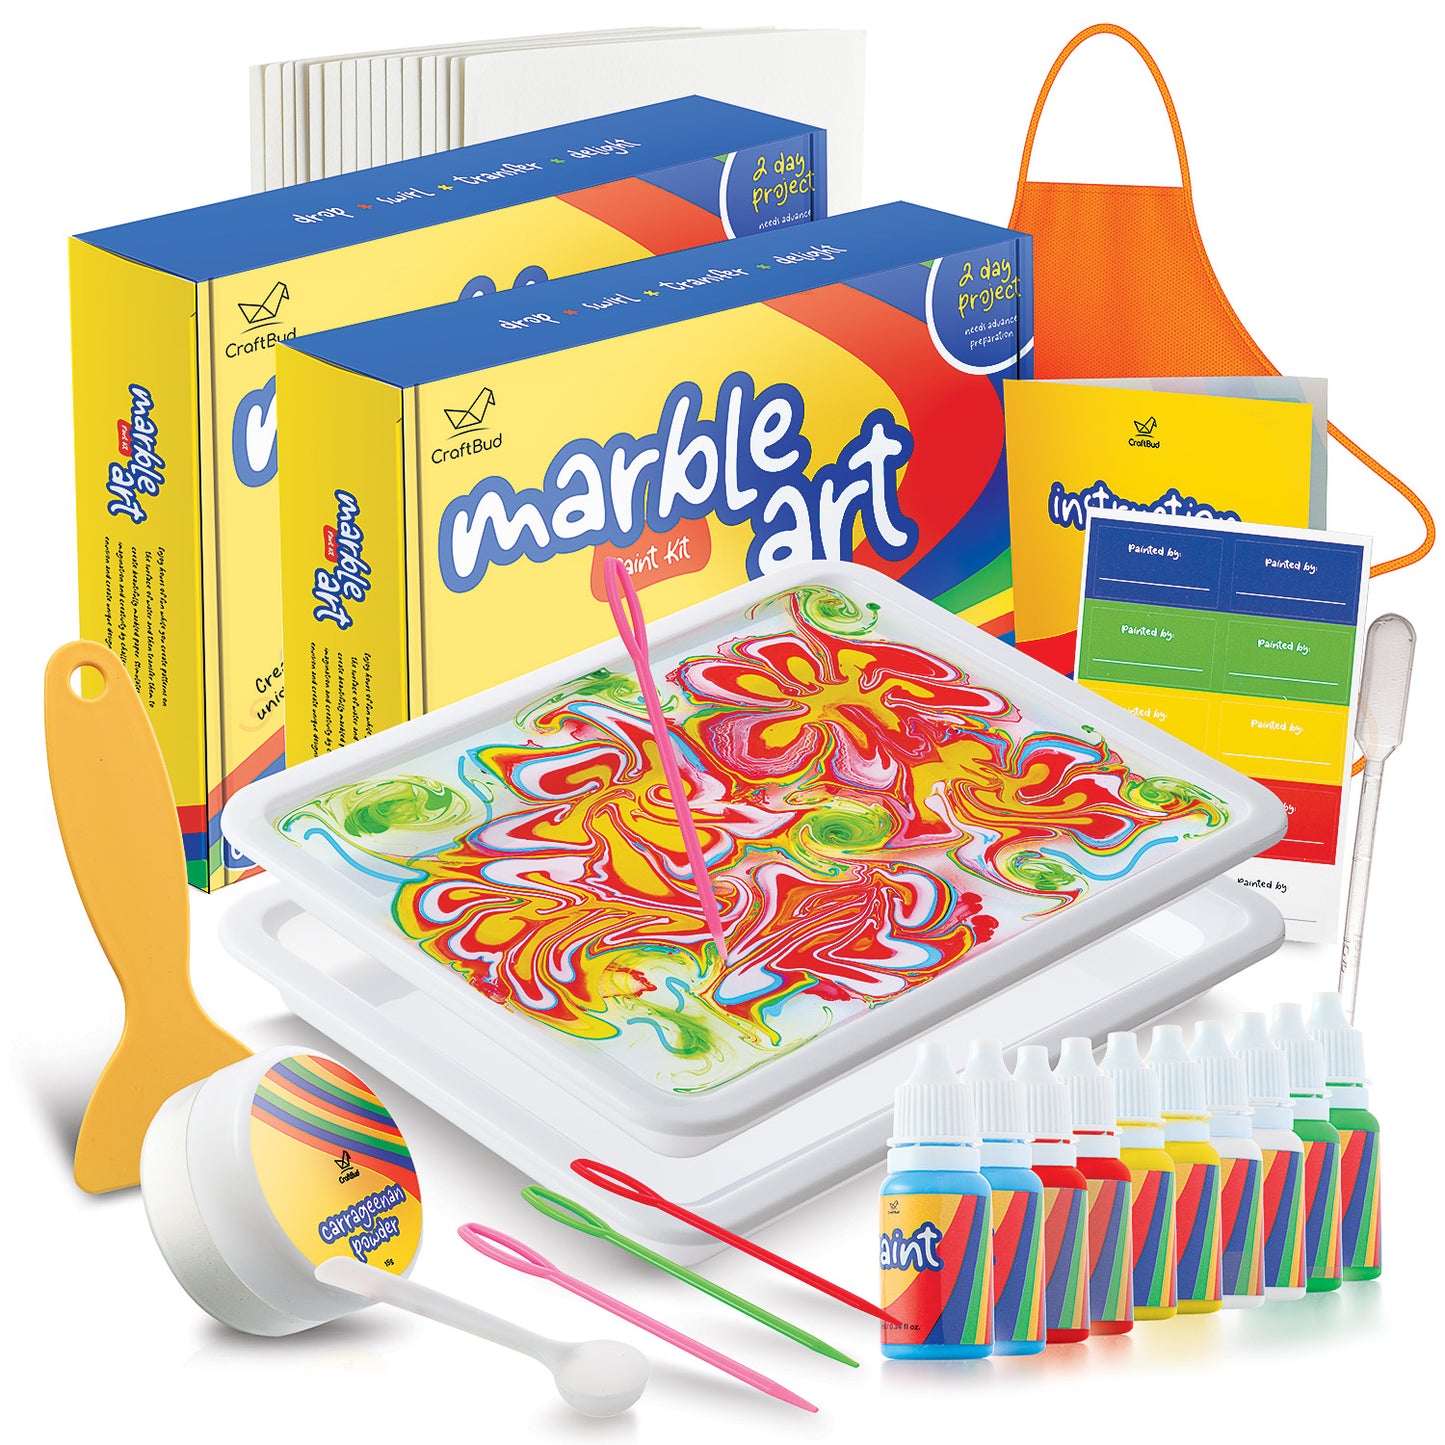 Craftorama Marbling Paint Kit for Kids, Fun and Educational Arts